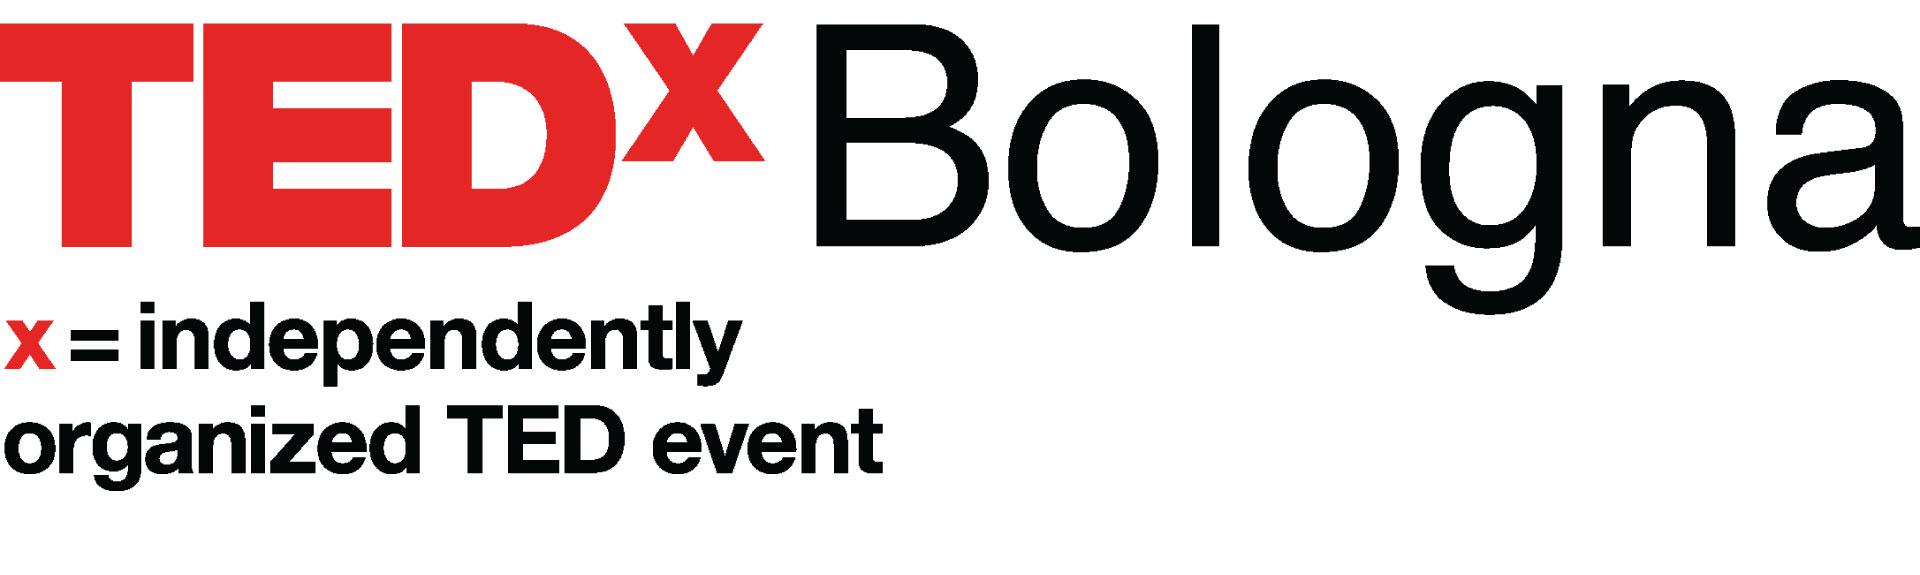 12/10: Weconomy al TEDxBologna!